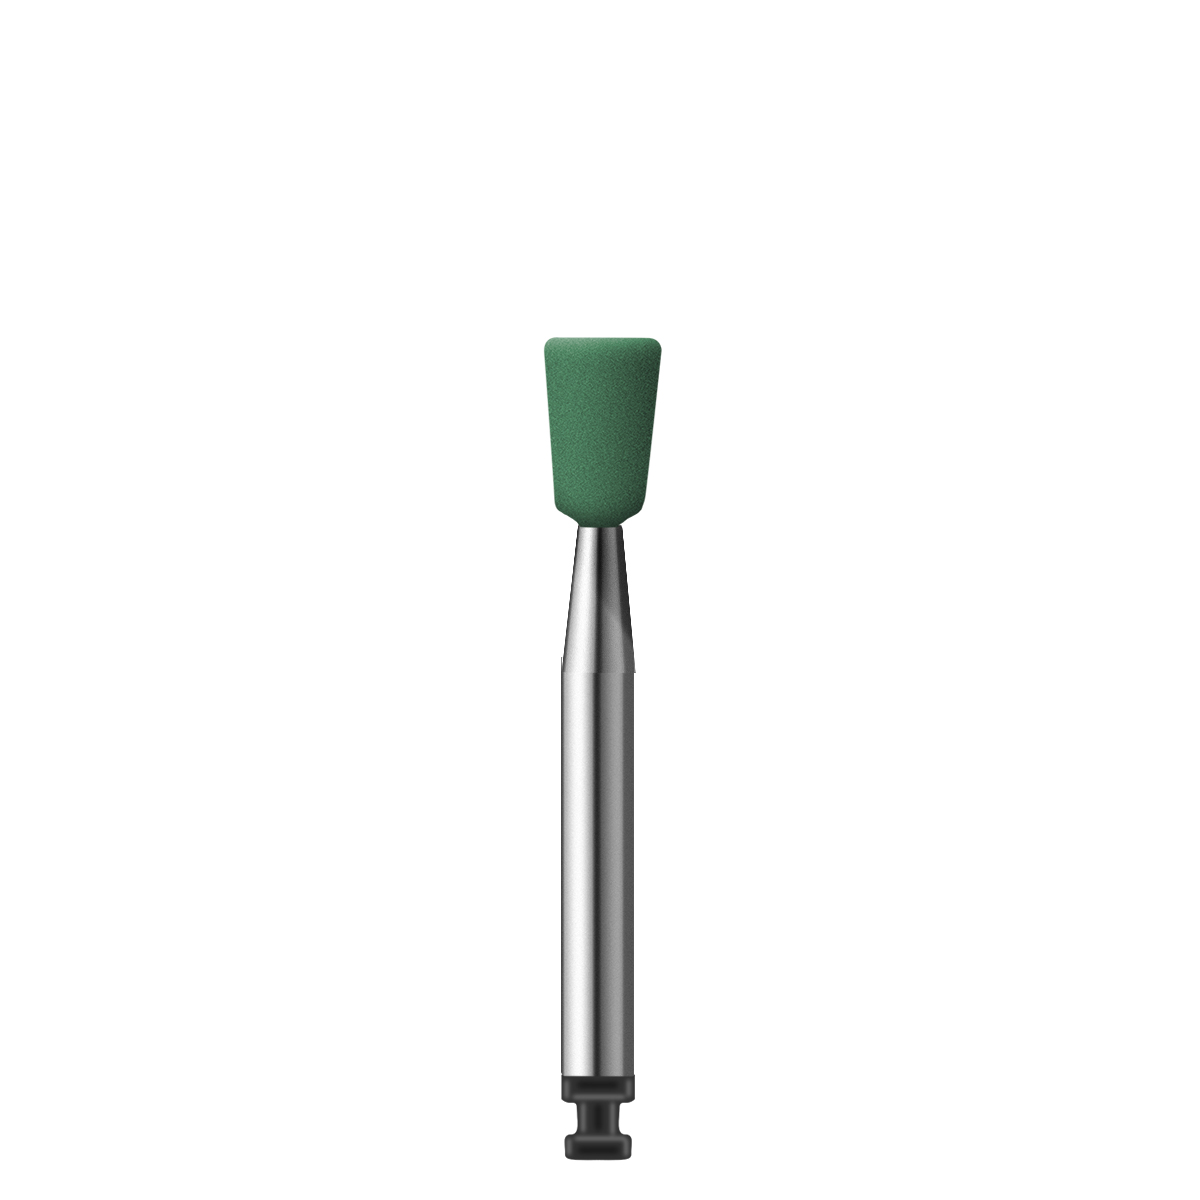 Polissoir Alphaflex 0139RA, vert, calice Ø 3,5 x
6 mm, lustrage